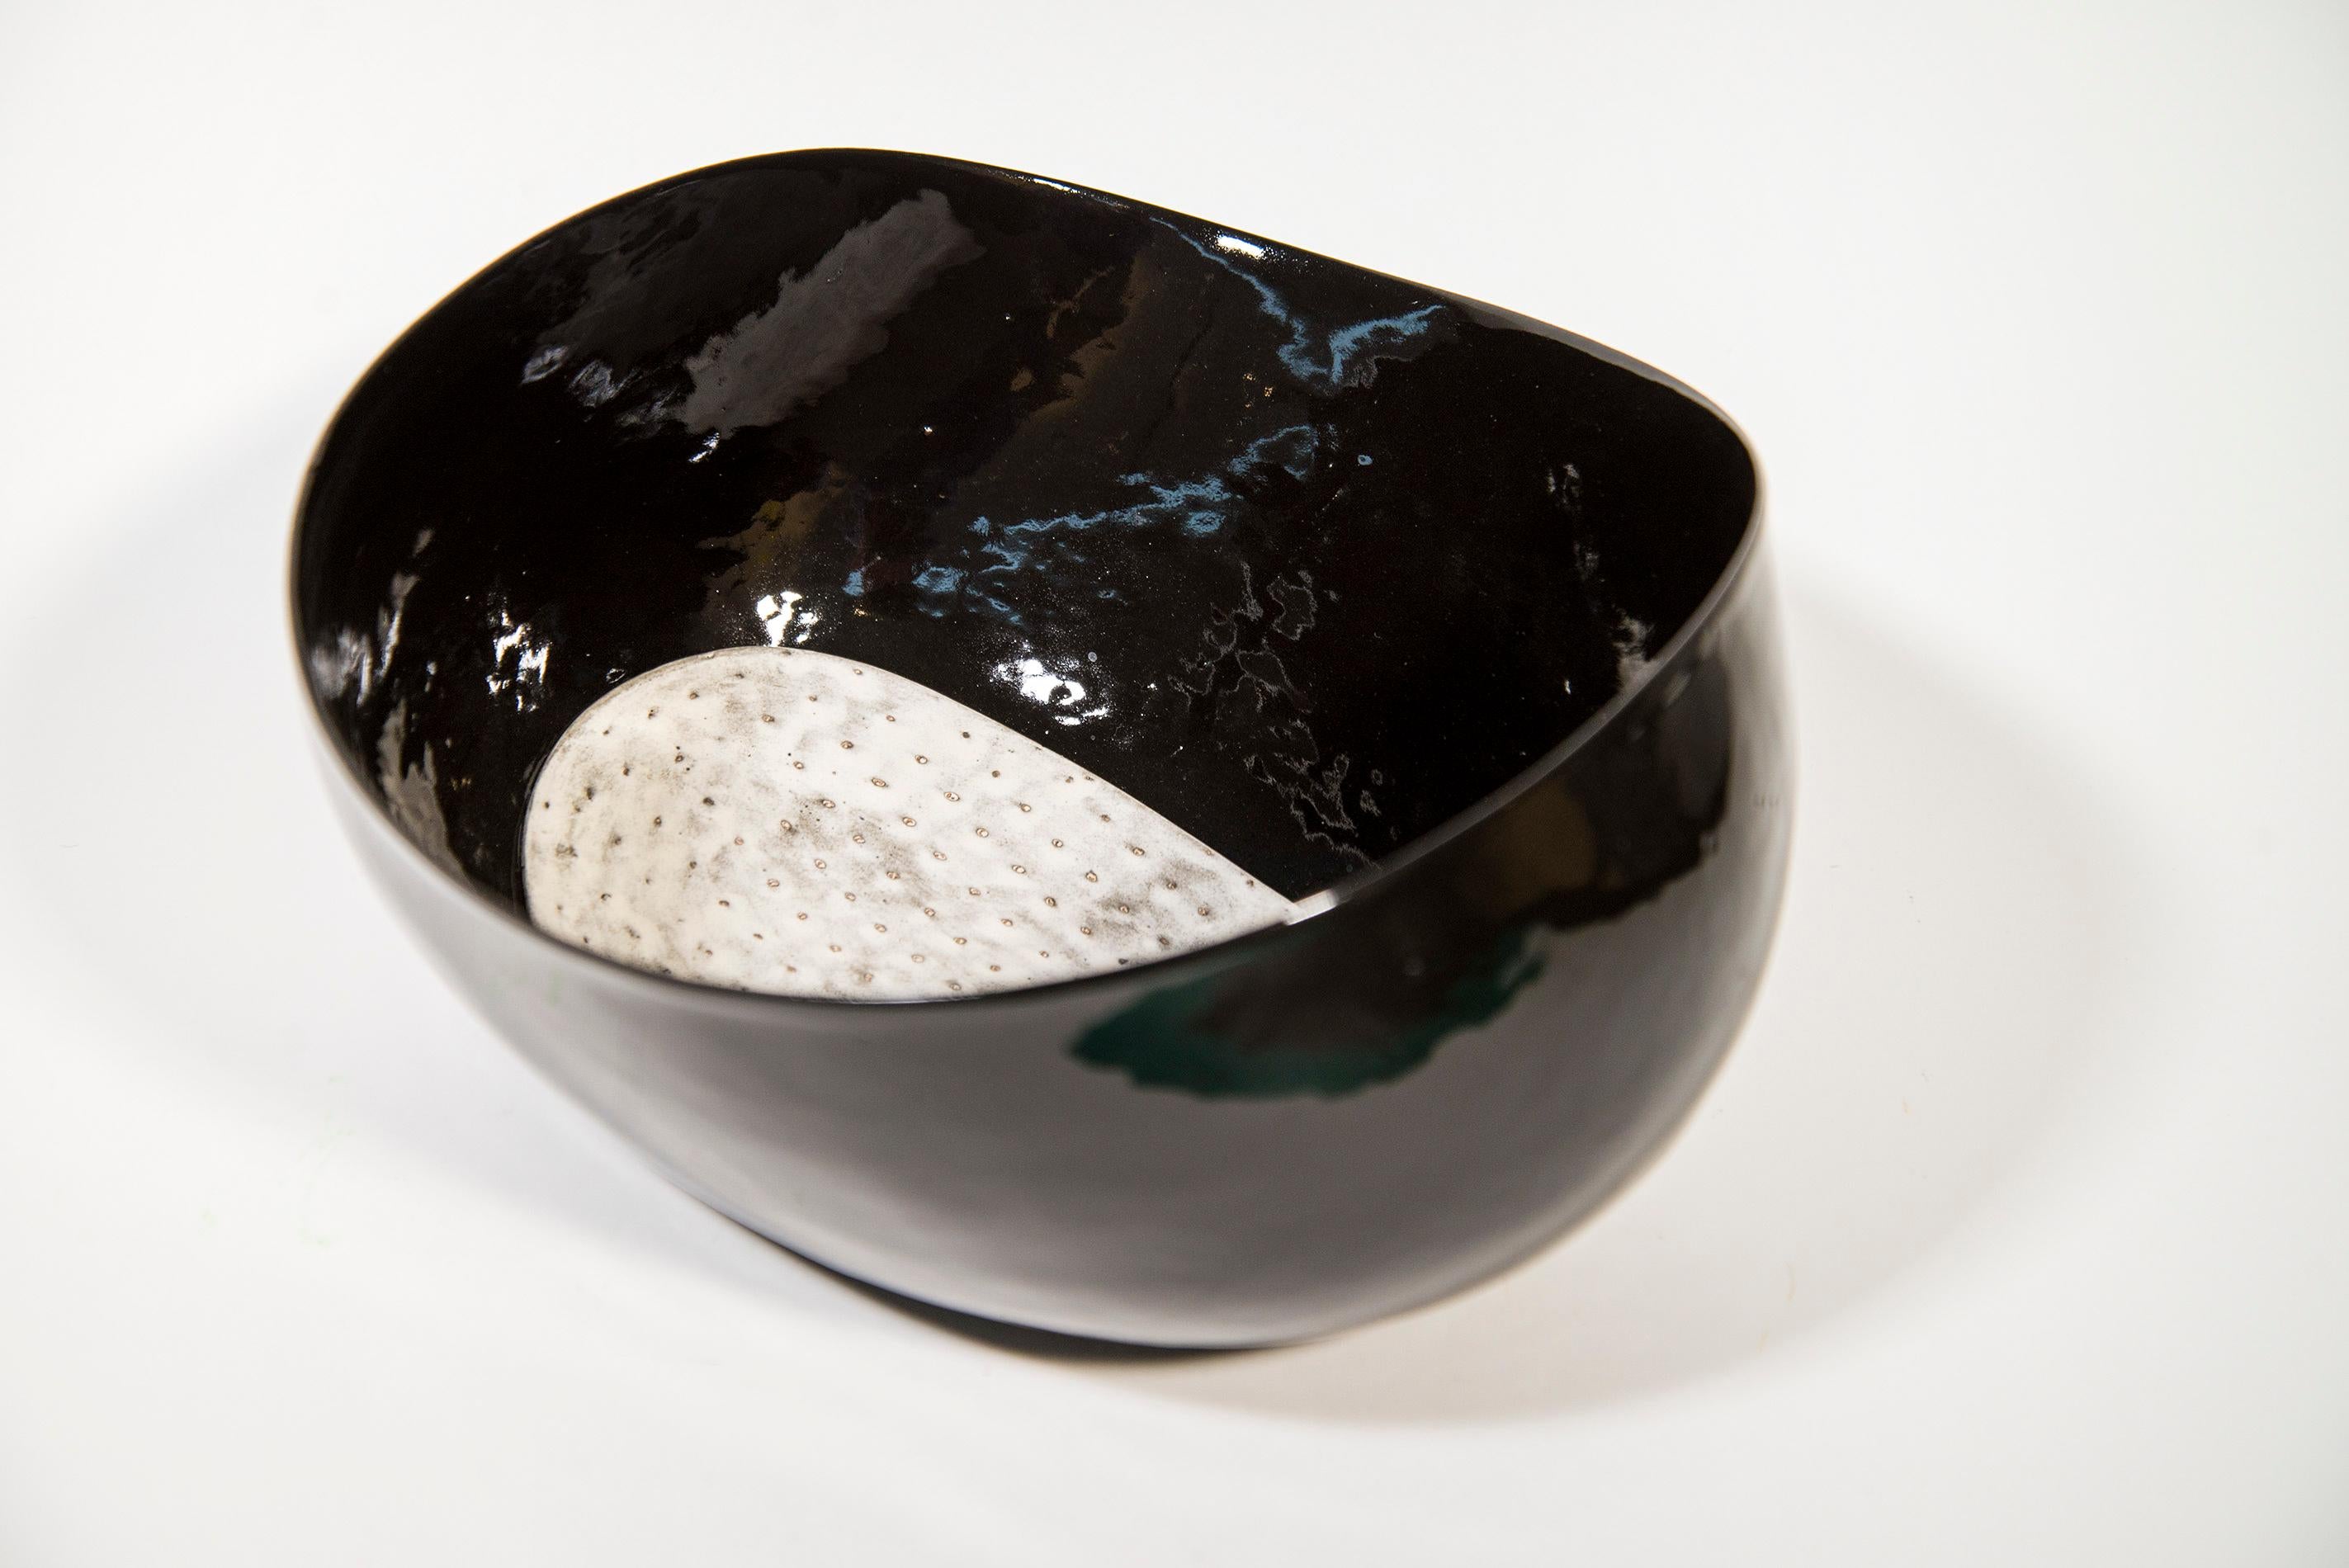 black-on-black ceramic vessel ap art history